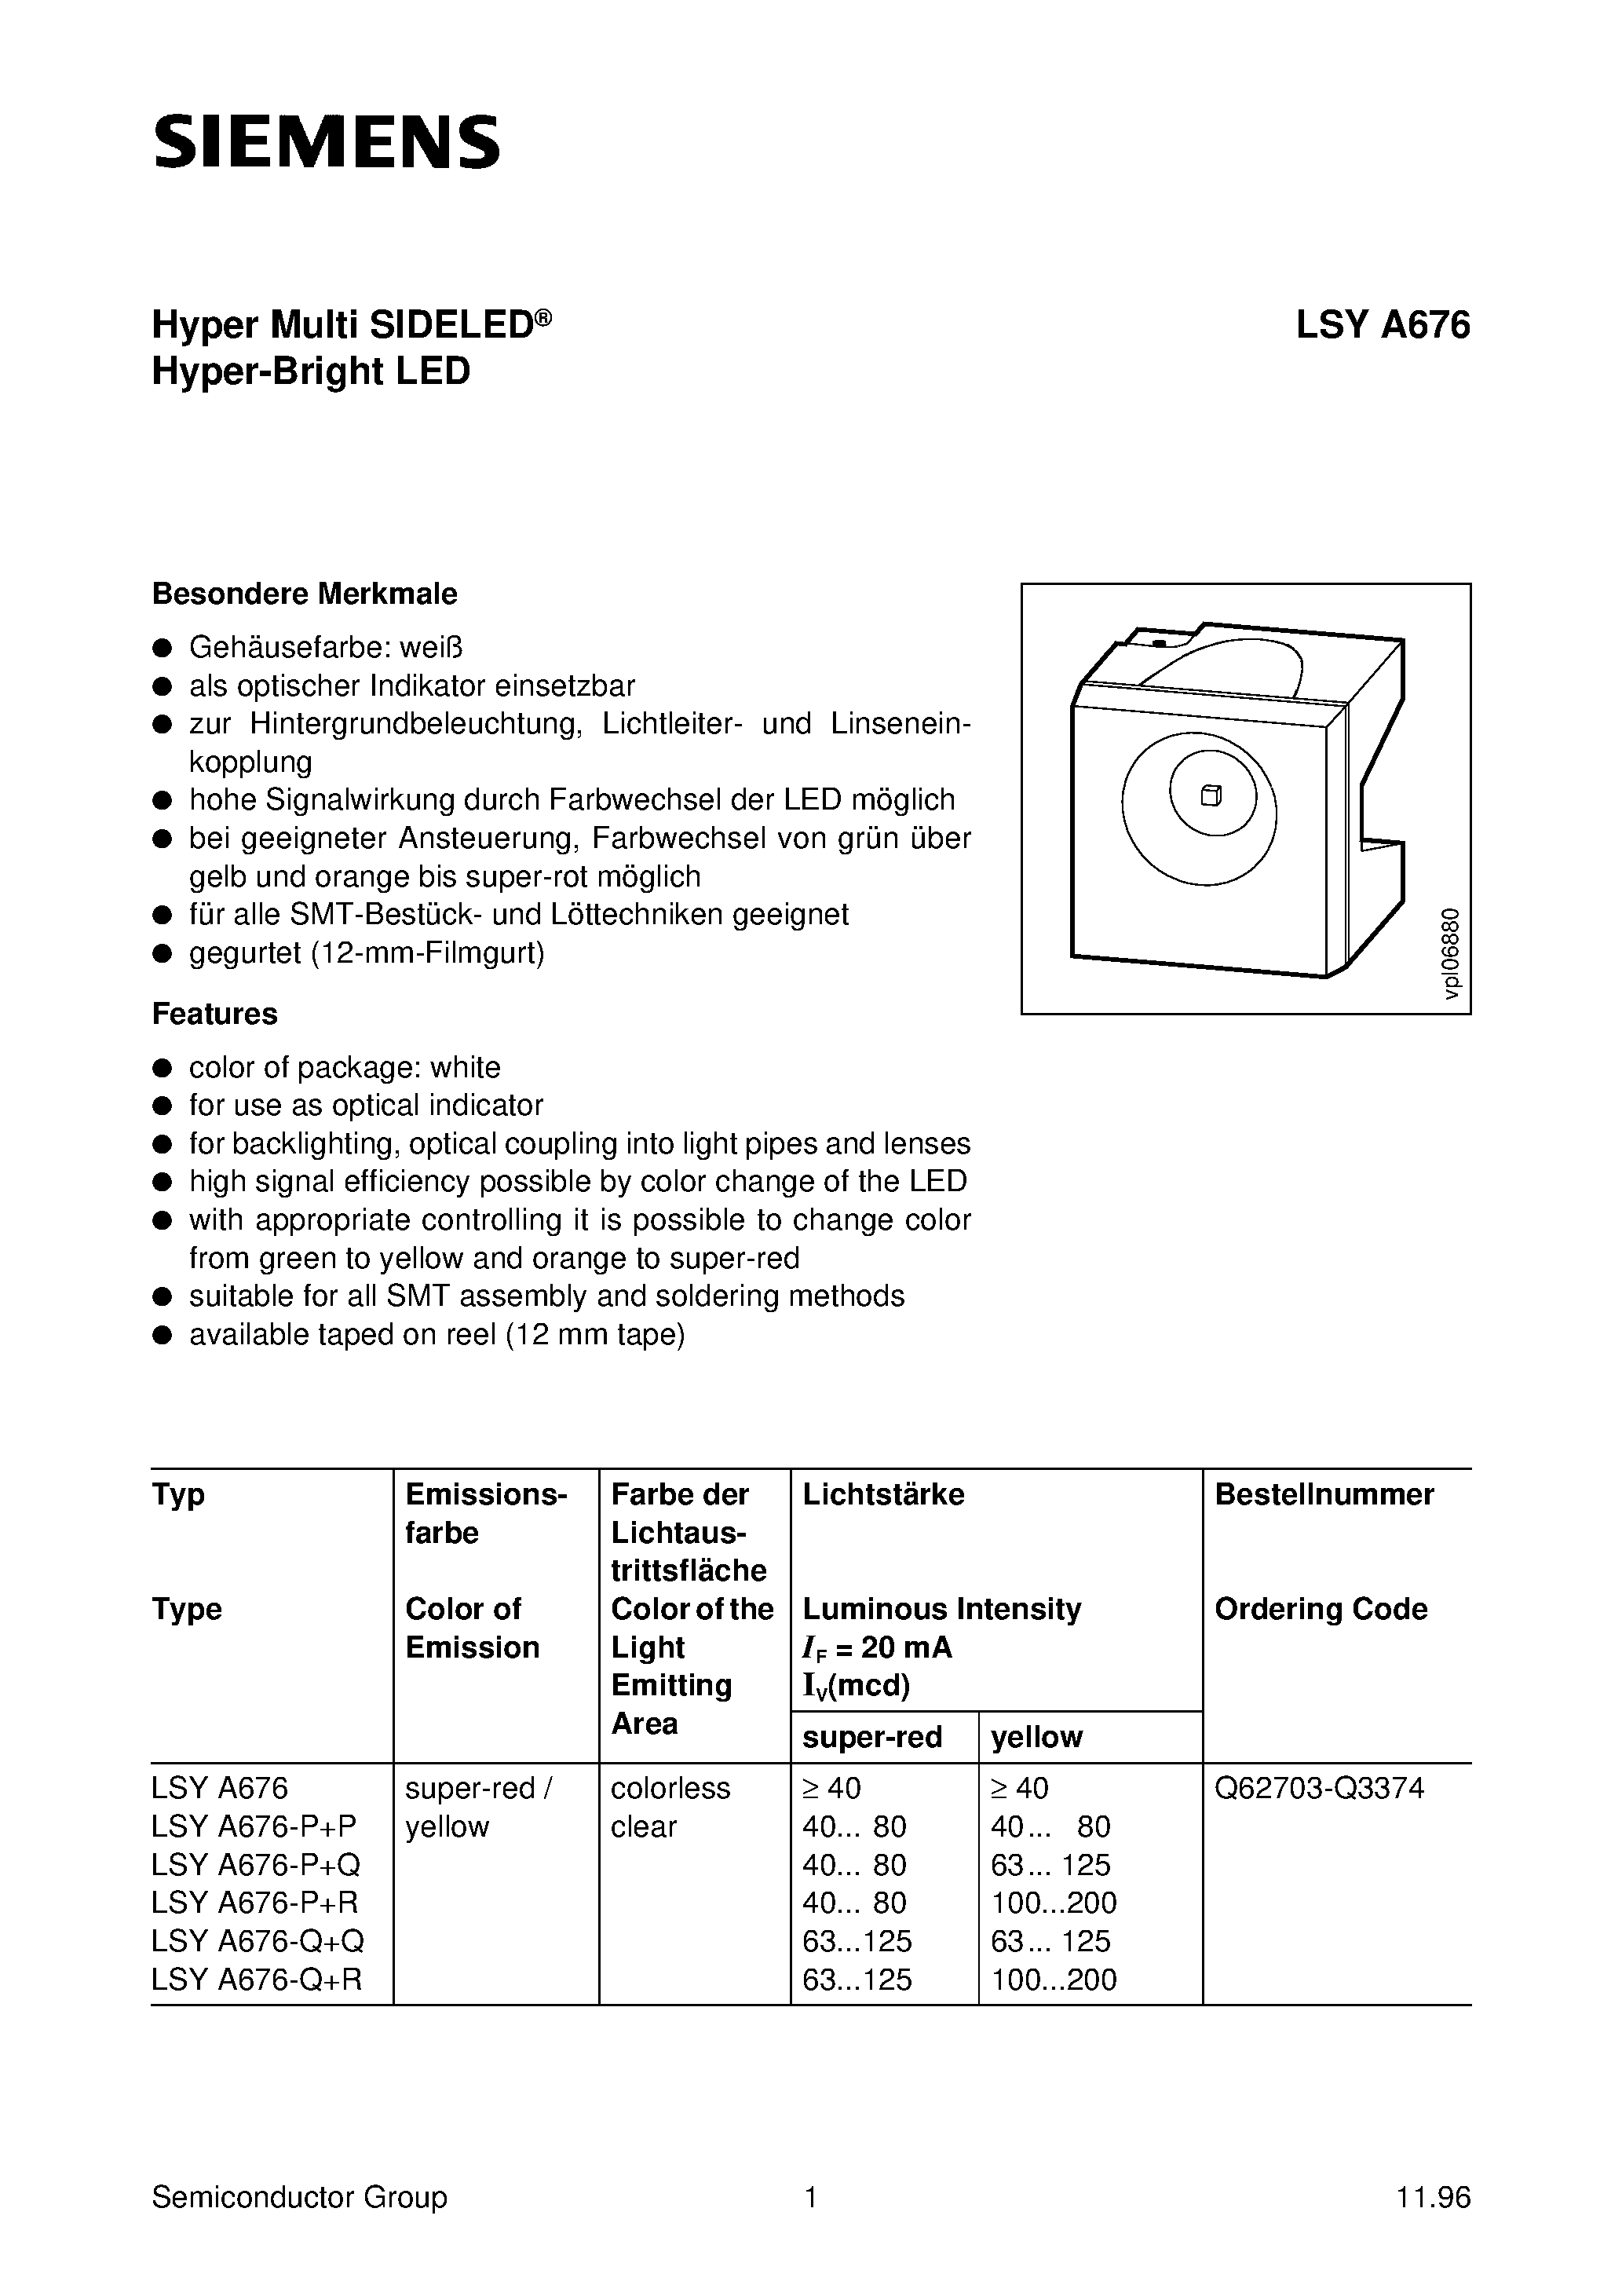 Даташит LSYA676-P+Q - Hyper Multi SIDELED Hyper-Bright LED страница 1